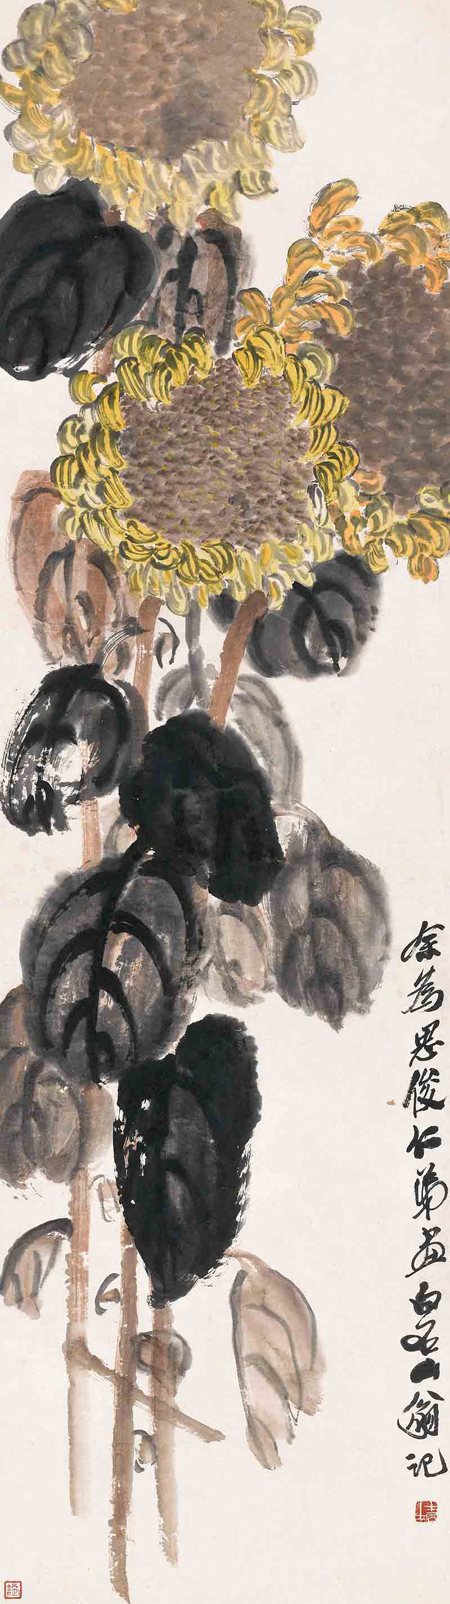 Family of writer Lao She donates paintings by Qi Baishi